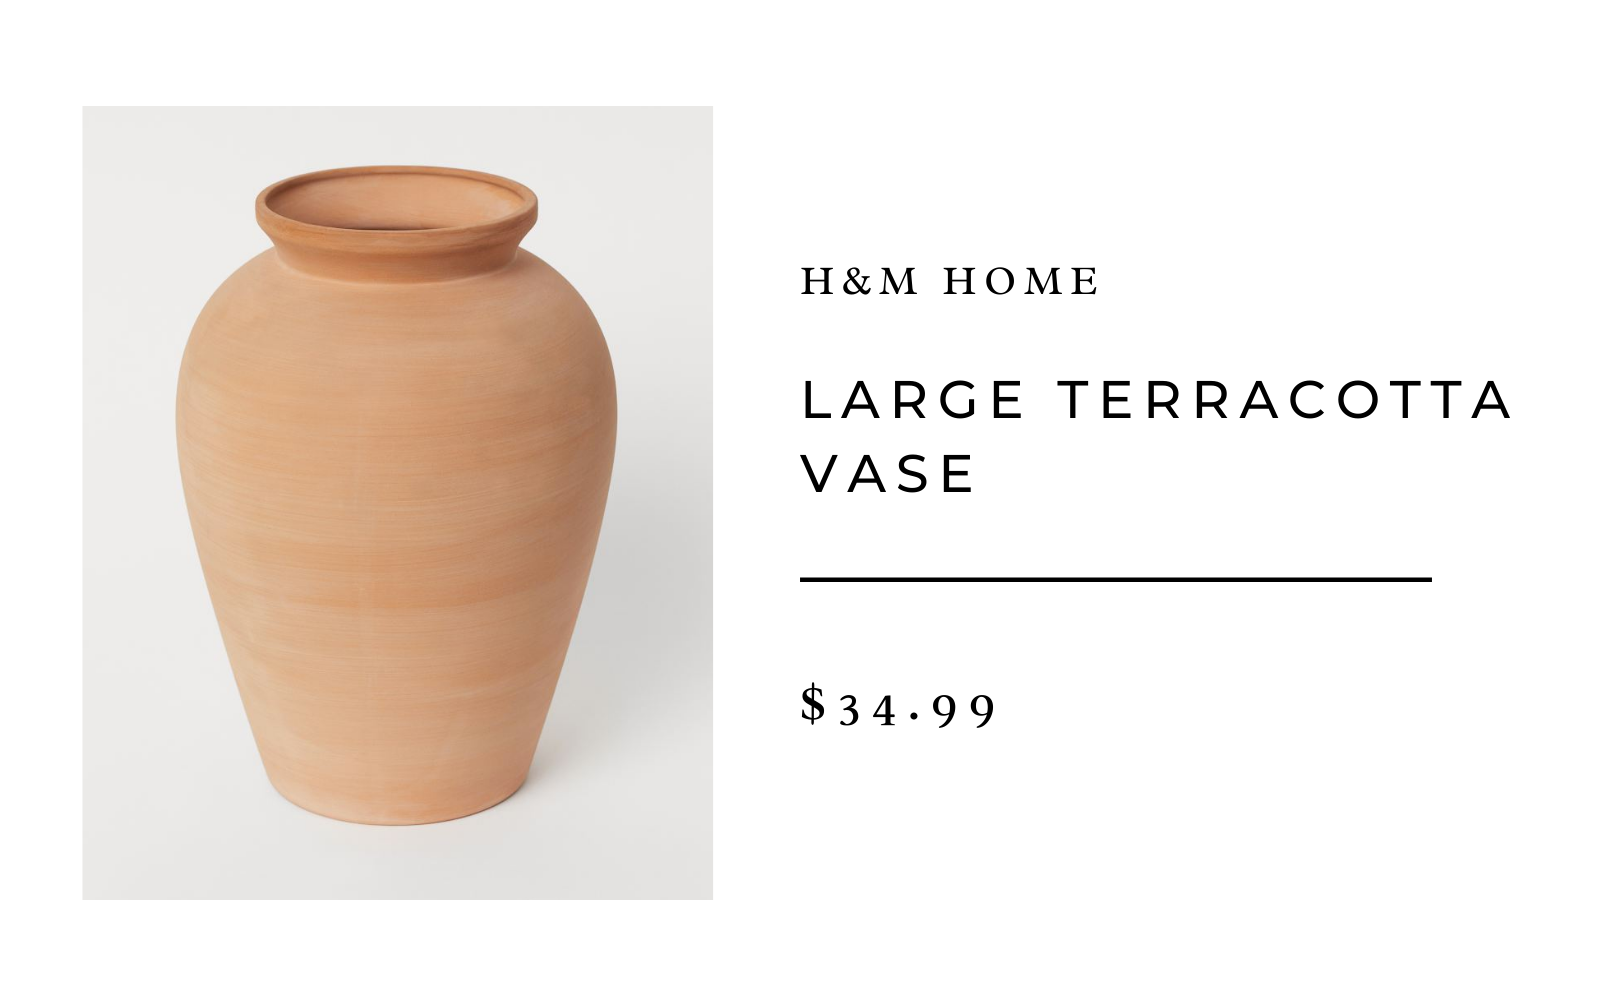 H&M Home Large Terracotta Vase